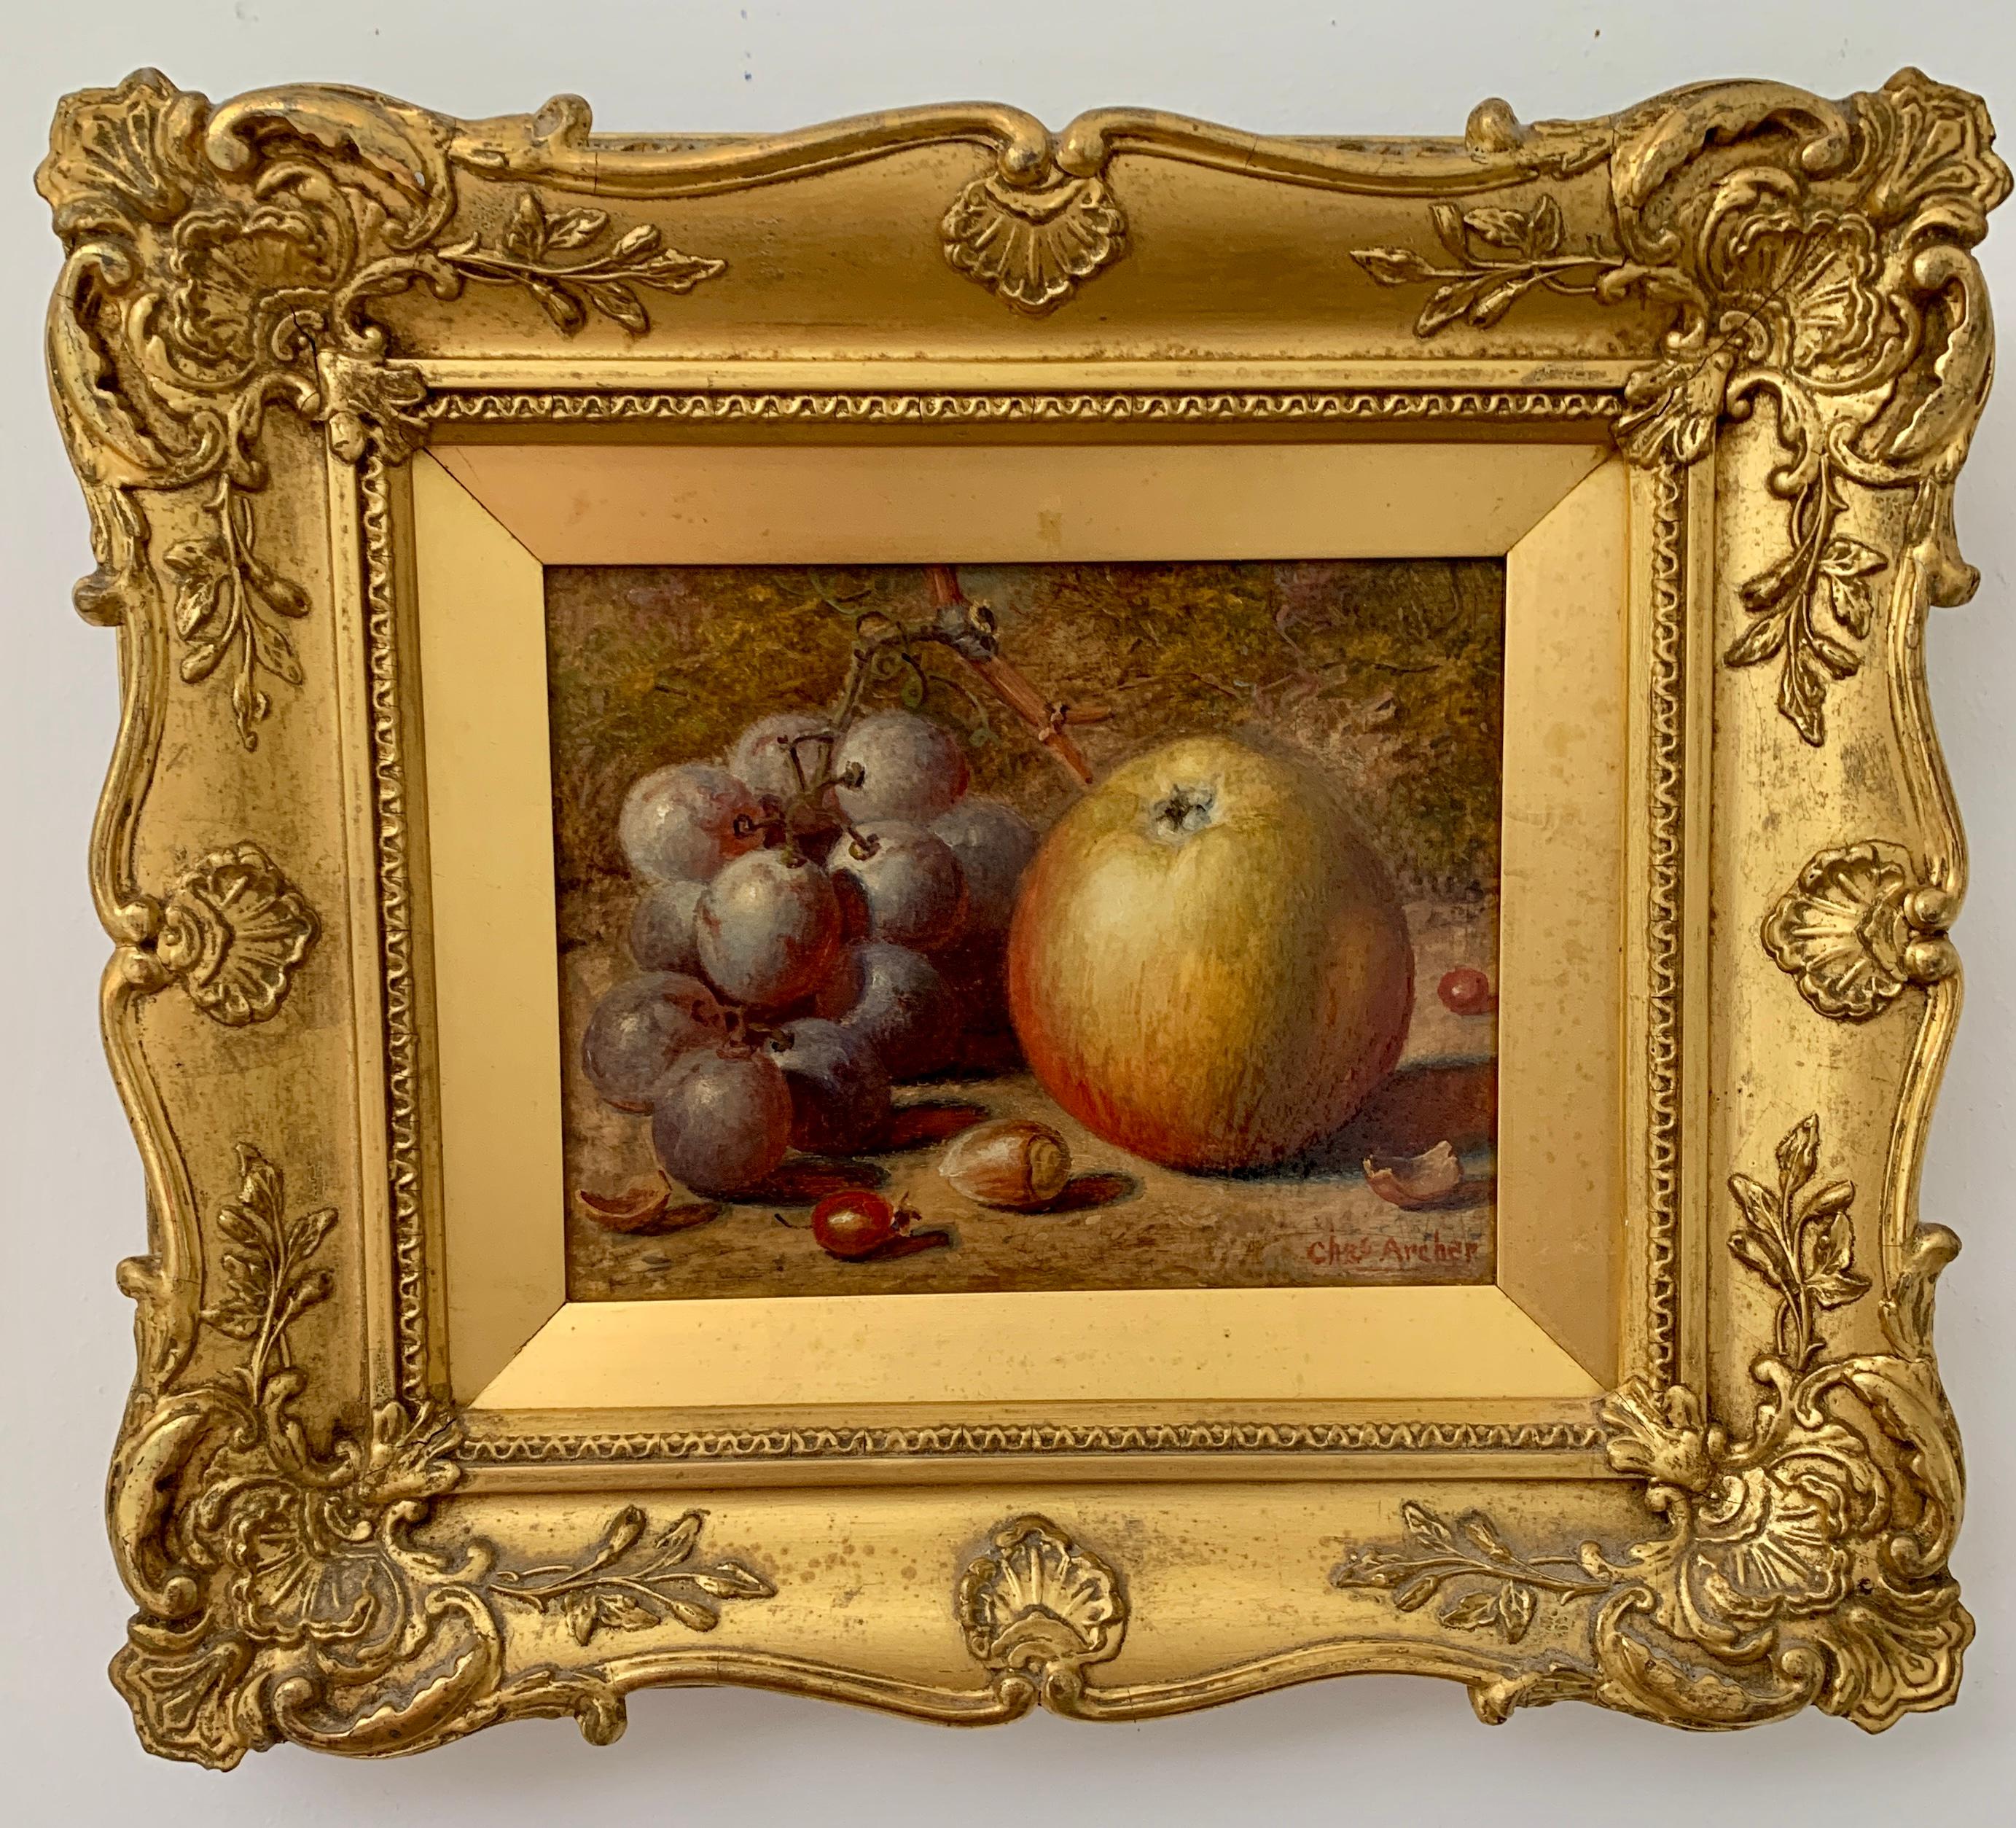 Charles Archer Figurative Painting - Victorian late 19th century English still life of Grapes, apple, hazelnut etc